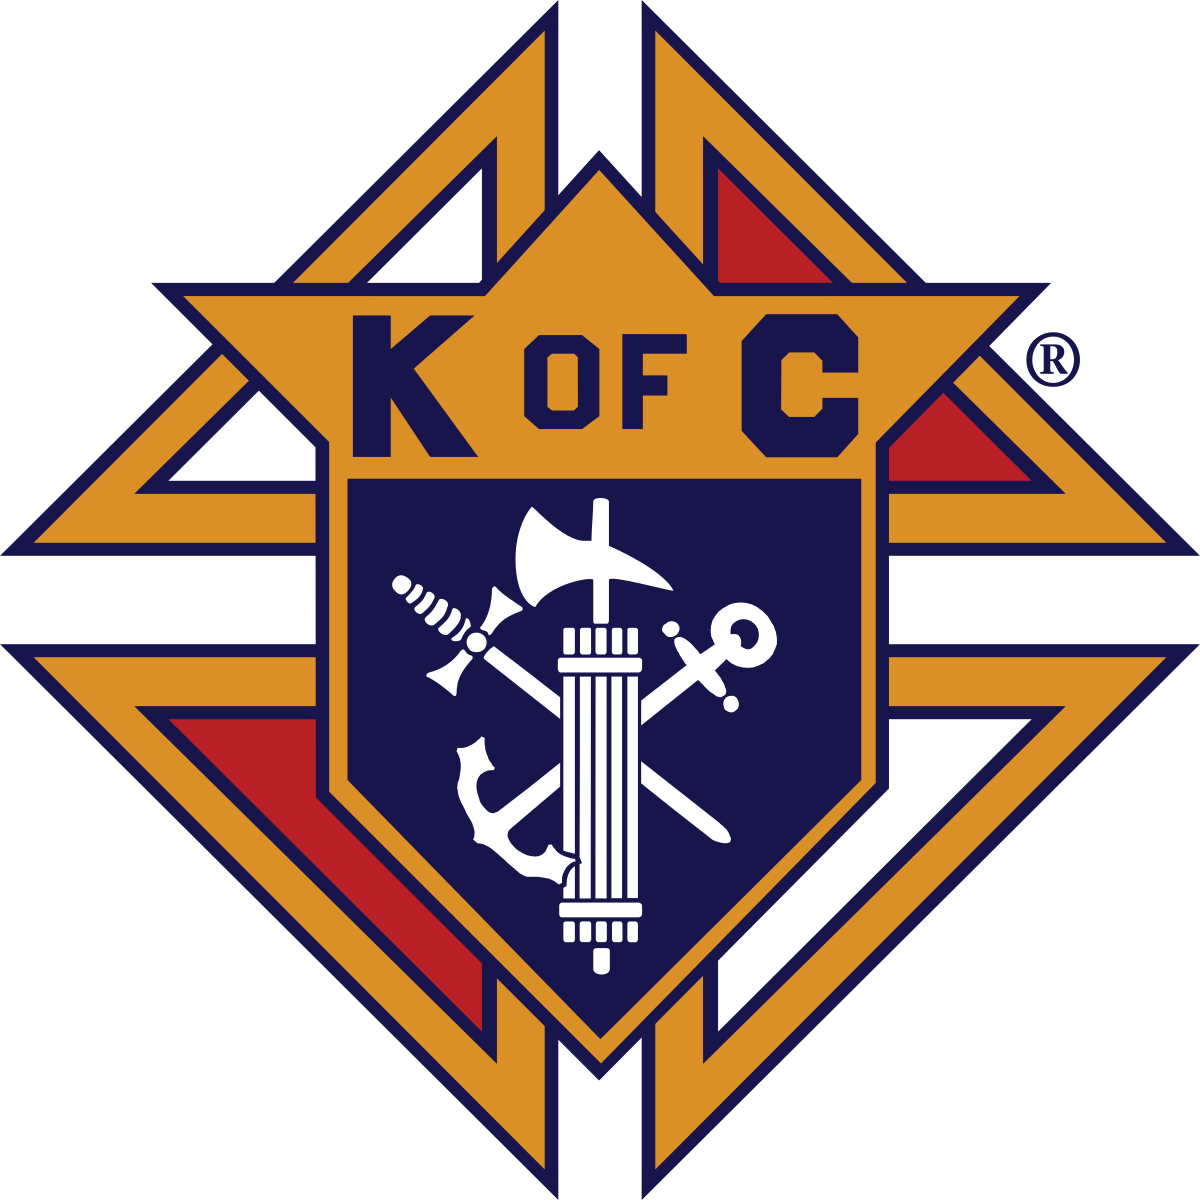 Floridak Ofc logo